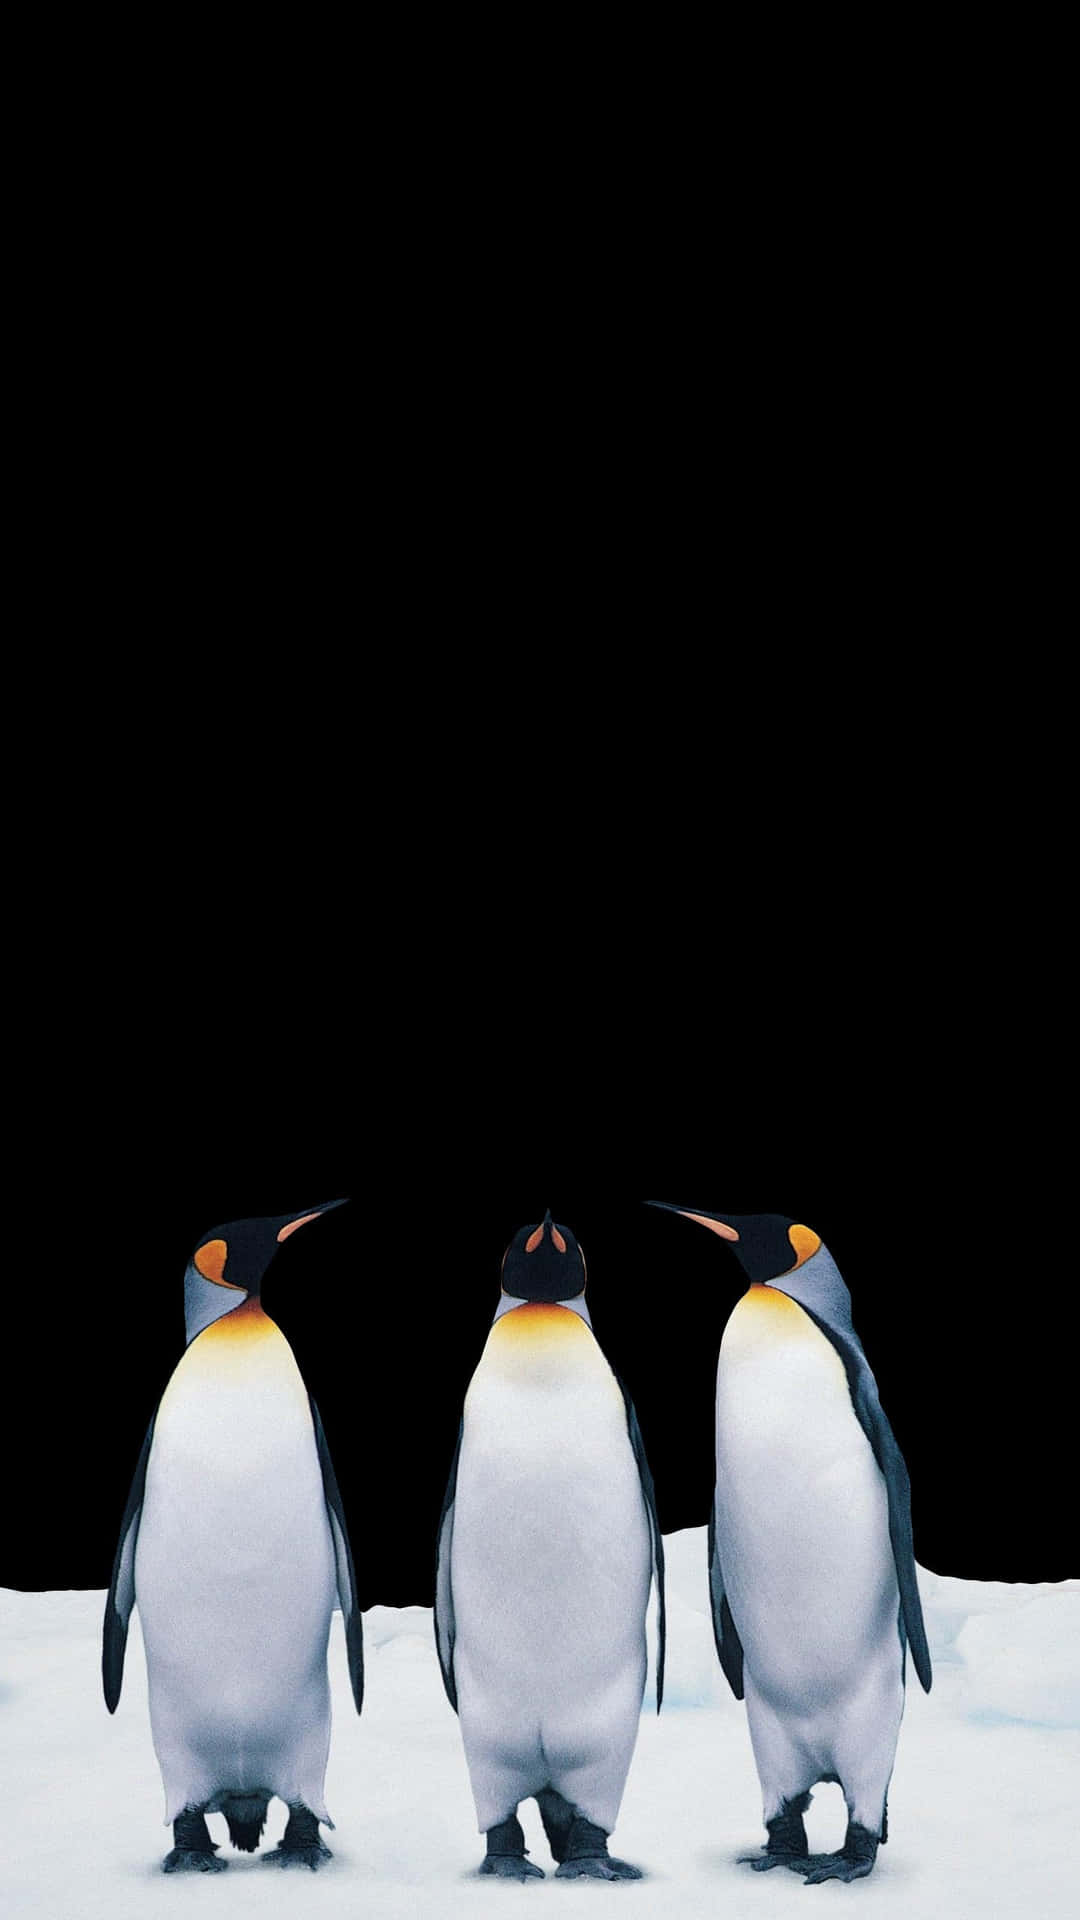 Pinguinpixel 3xl Amoled Hintergrund